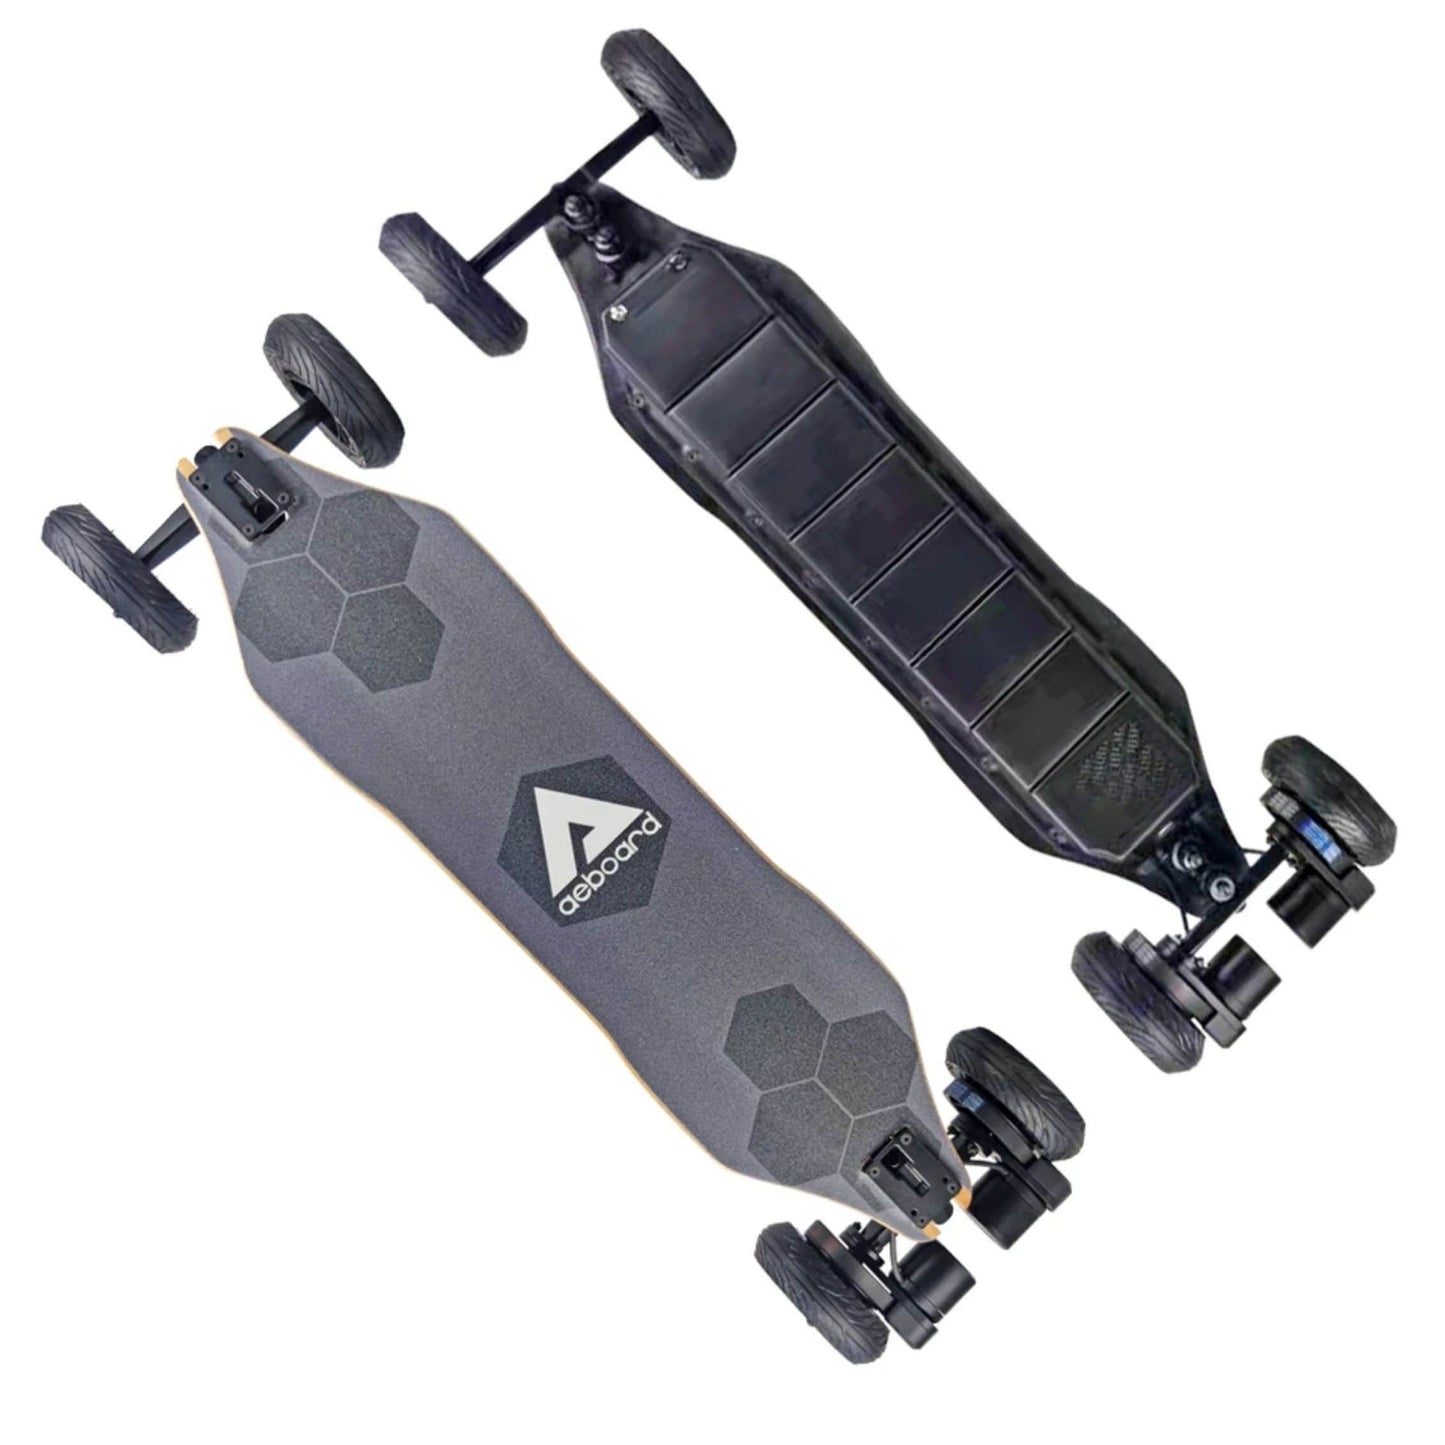 Aeboard GTR Electric Skateboard